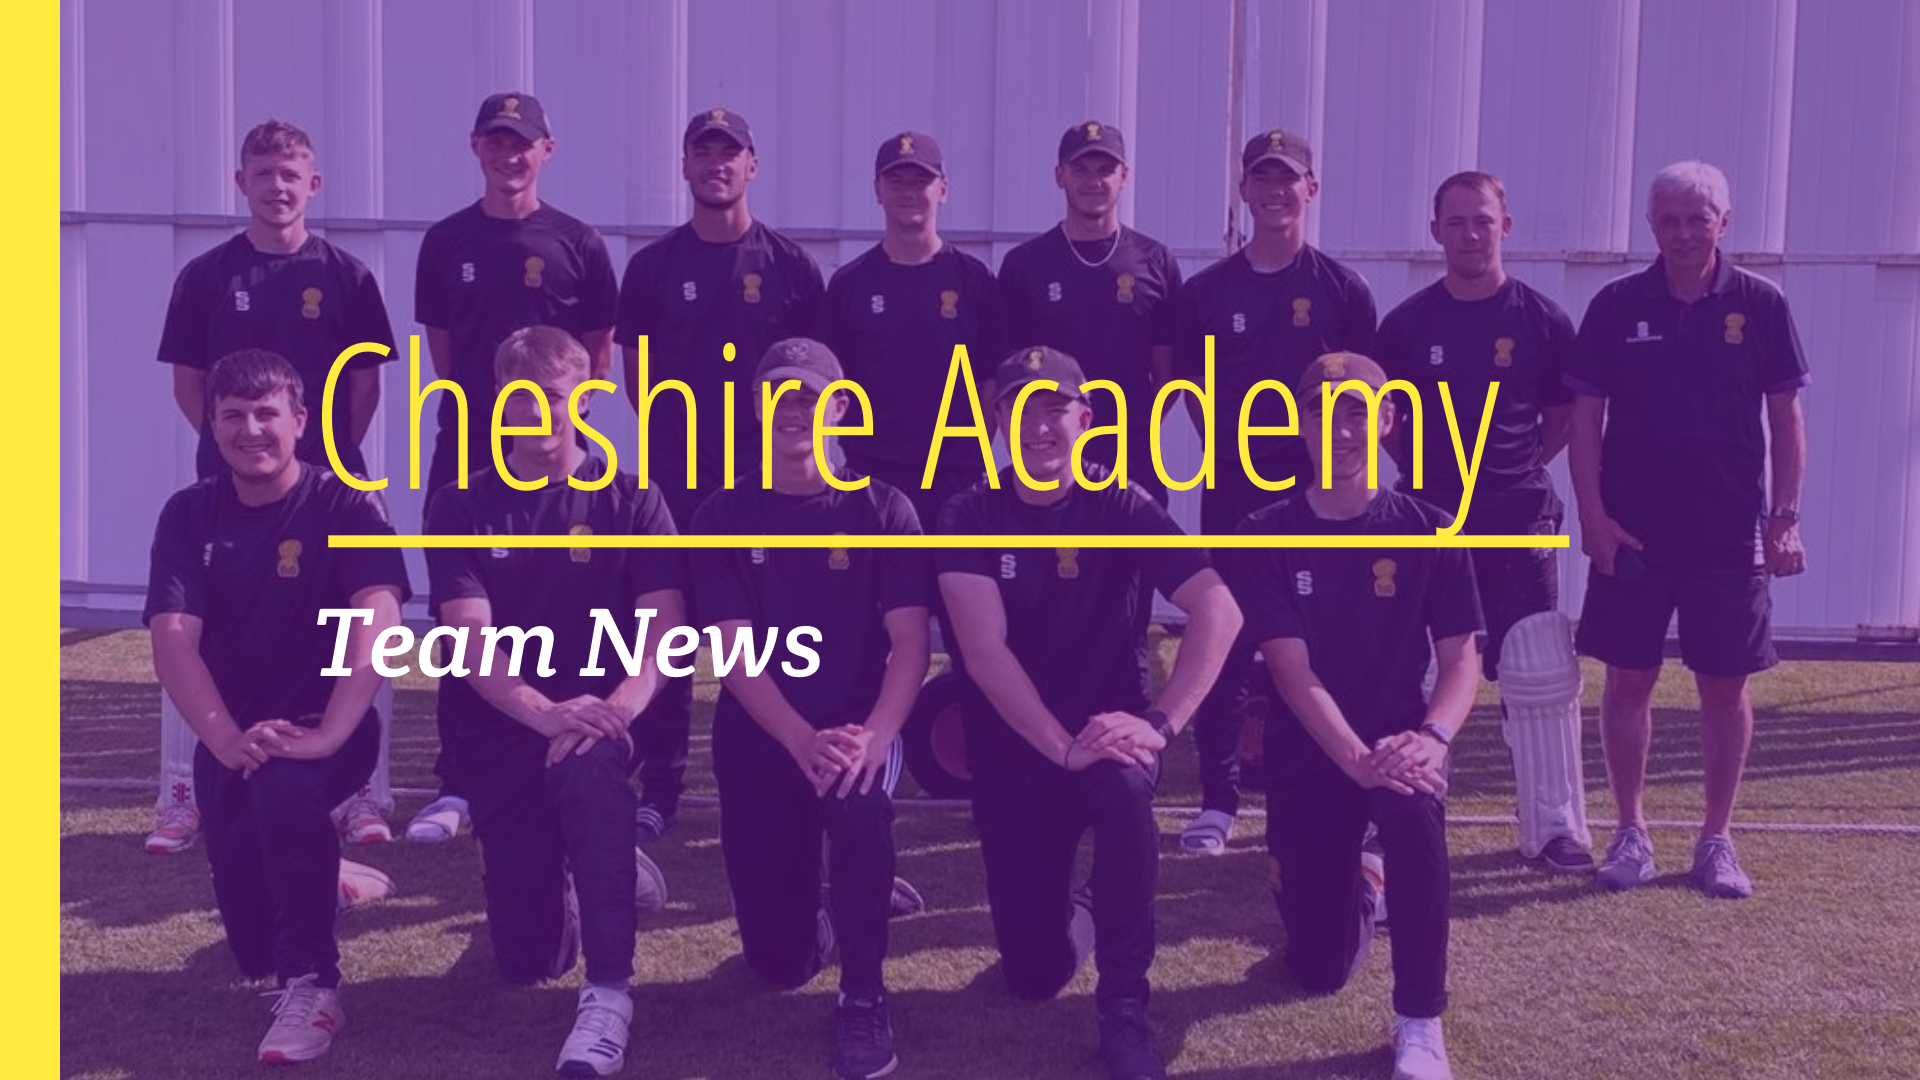 Cheshire Academy at Weston, Tuesday/Wednesday 21,22 June